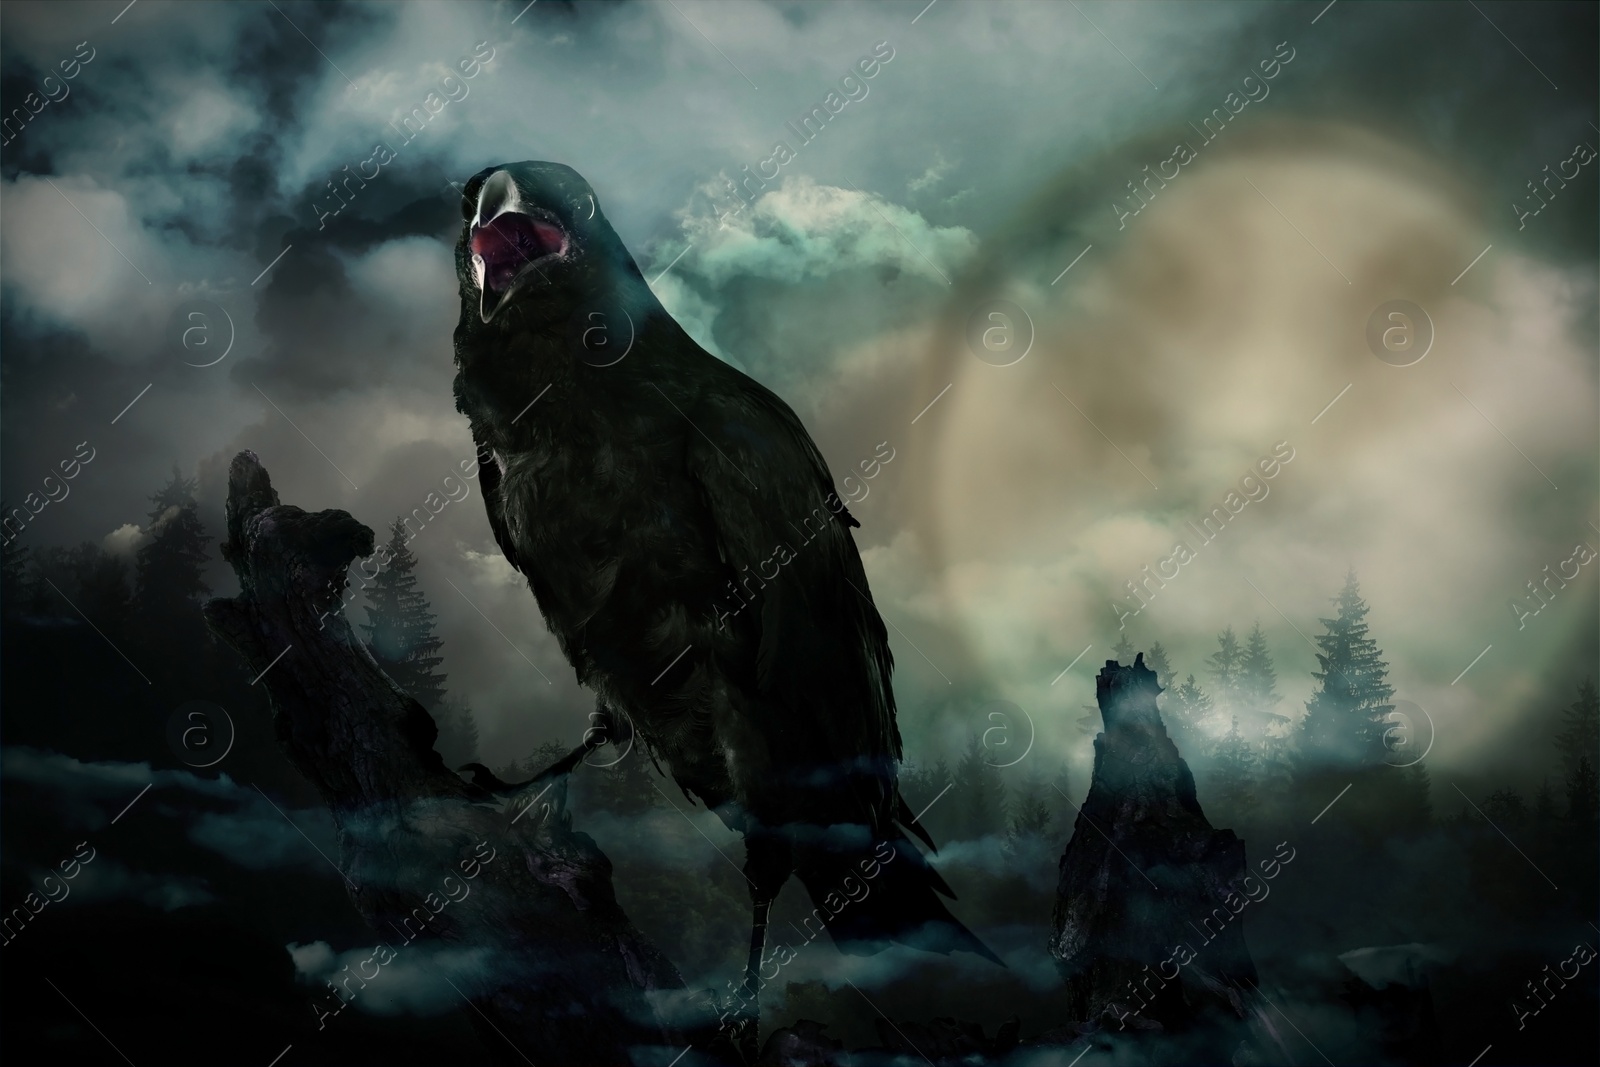 Image of Creepy black crow croaking in misty dark forest on full moon night